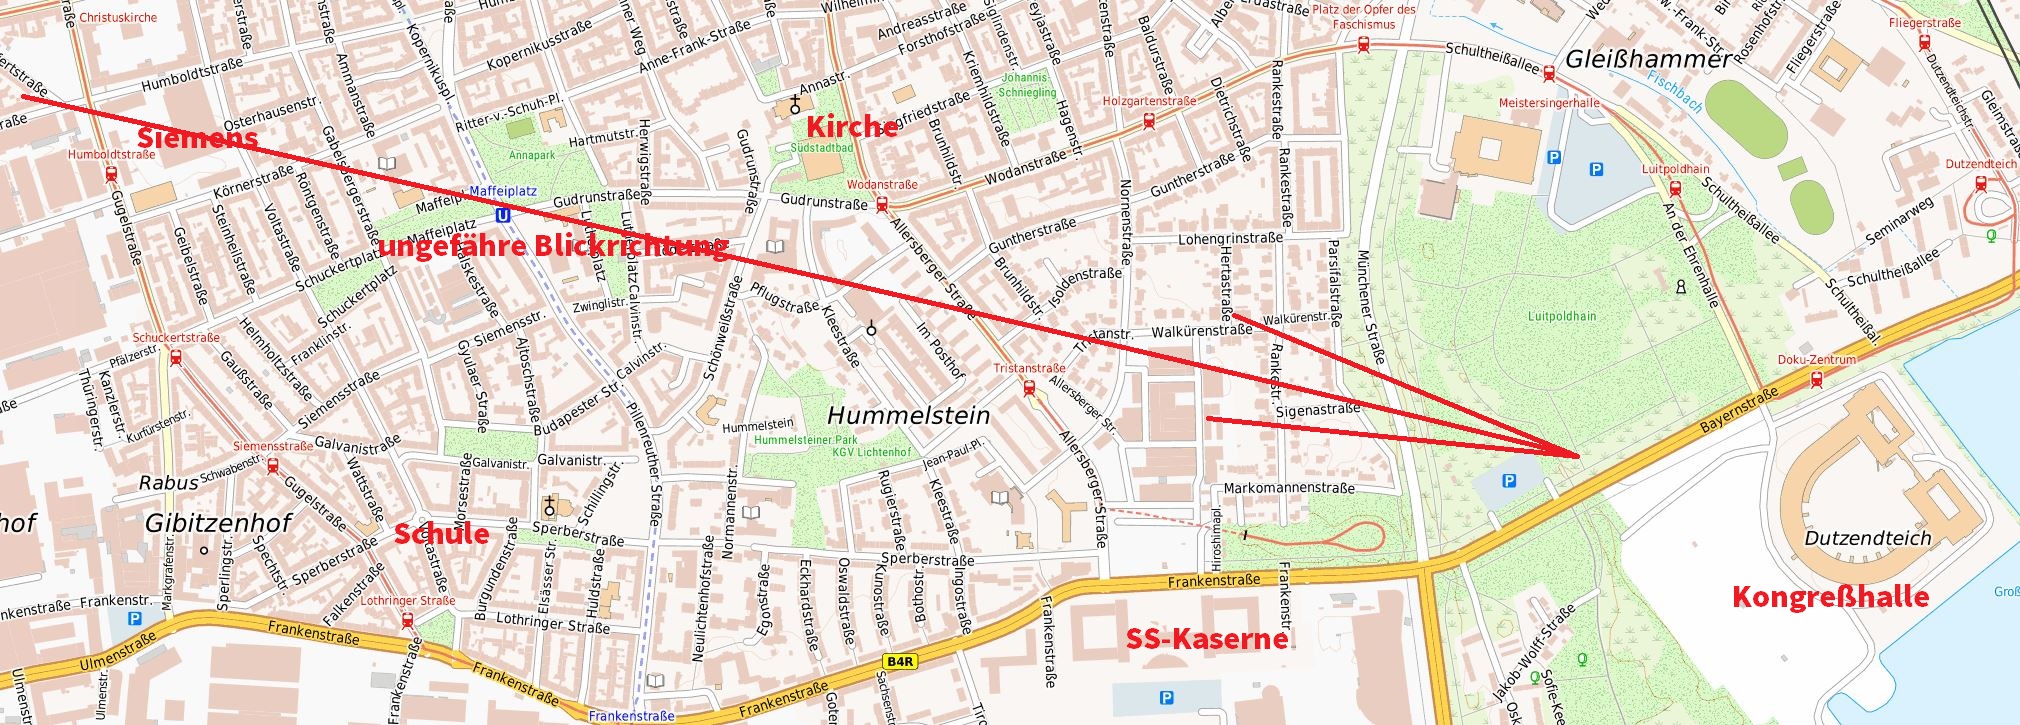 Nürnberg - Stadtplan mit Blickrichtung